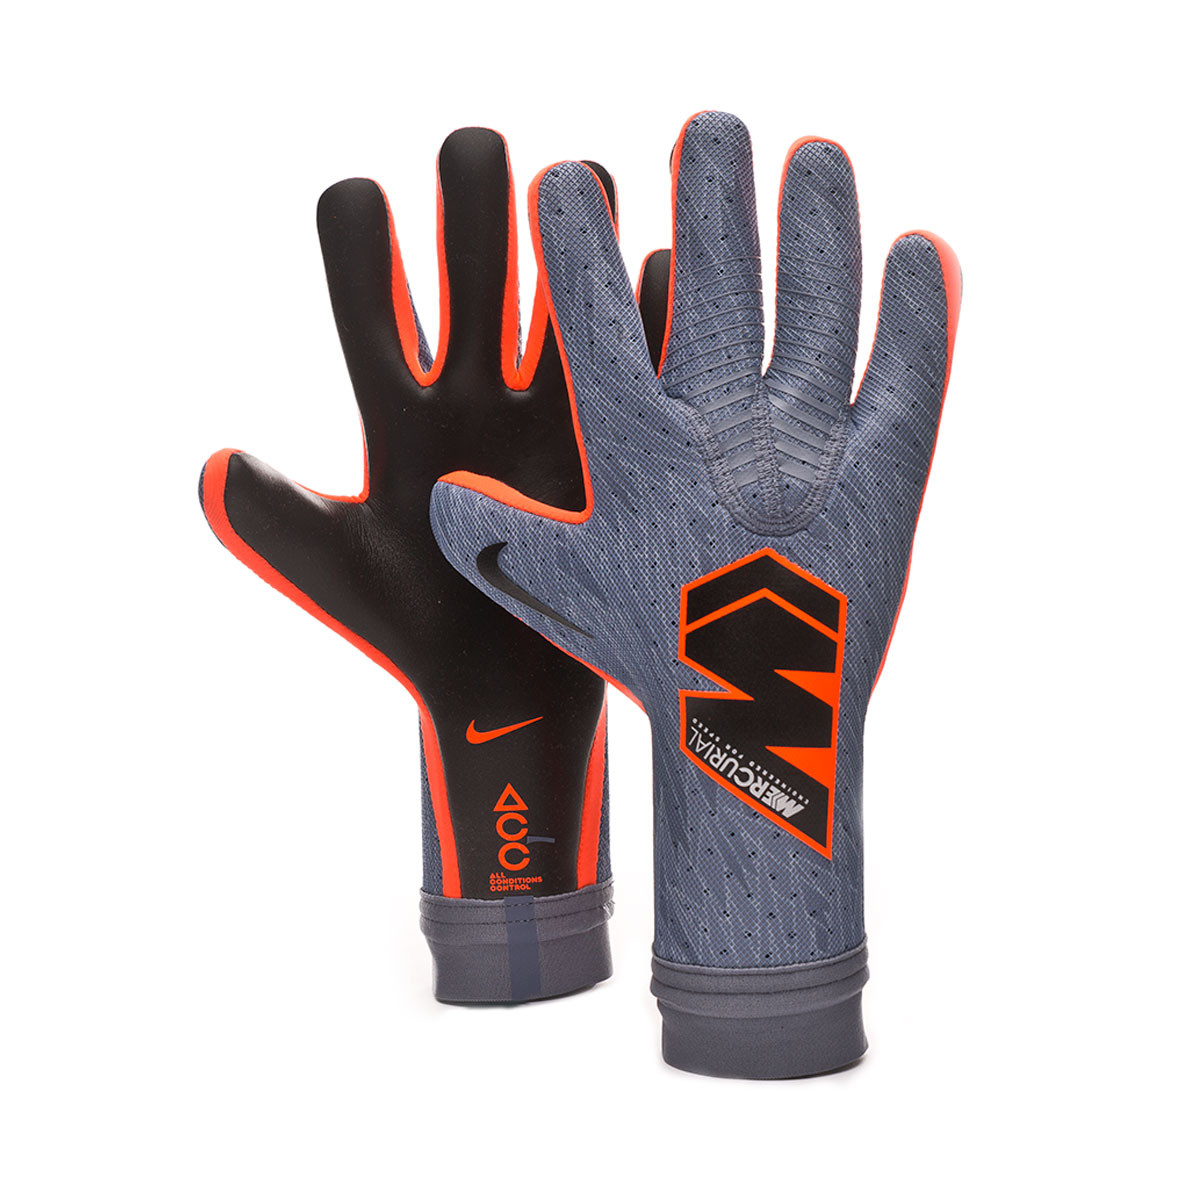 mercurial touch elite goalkeeper gloves